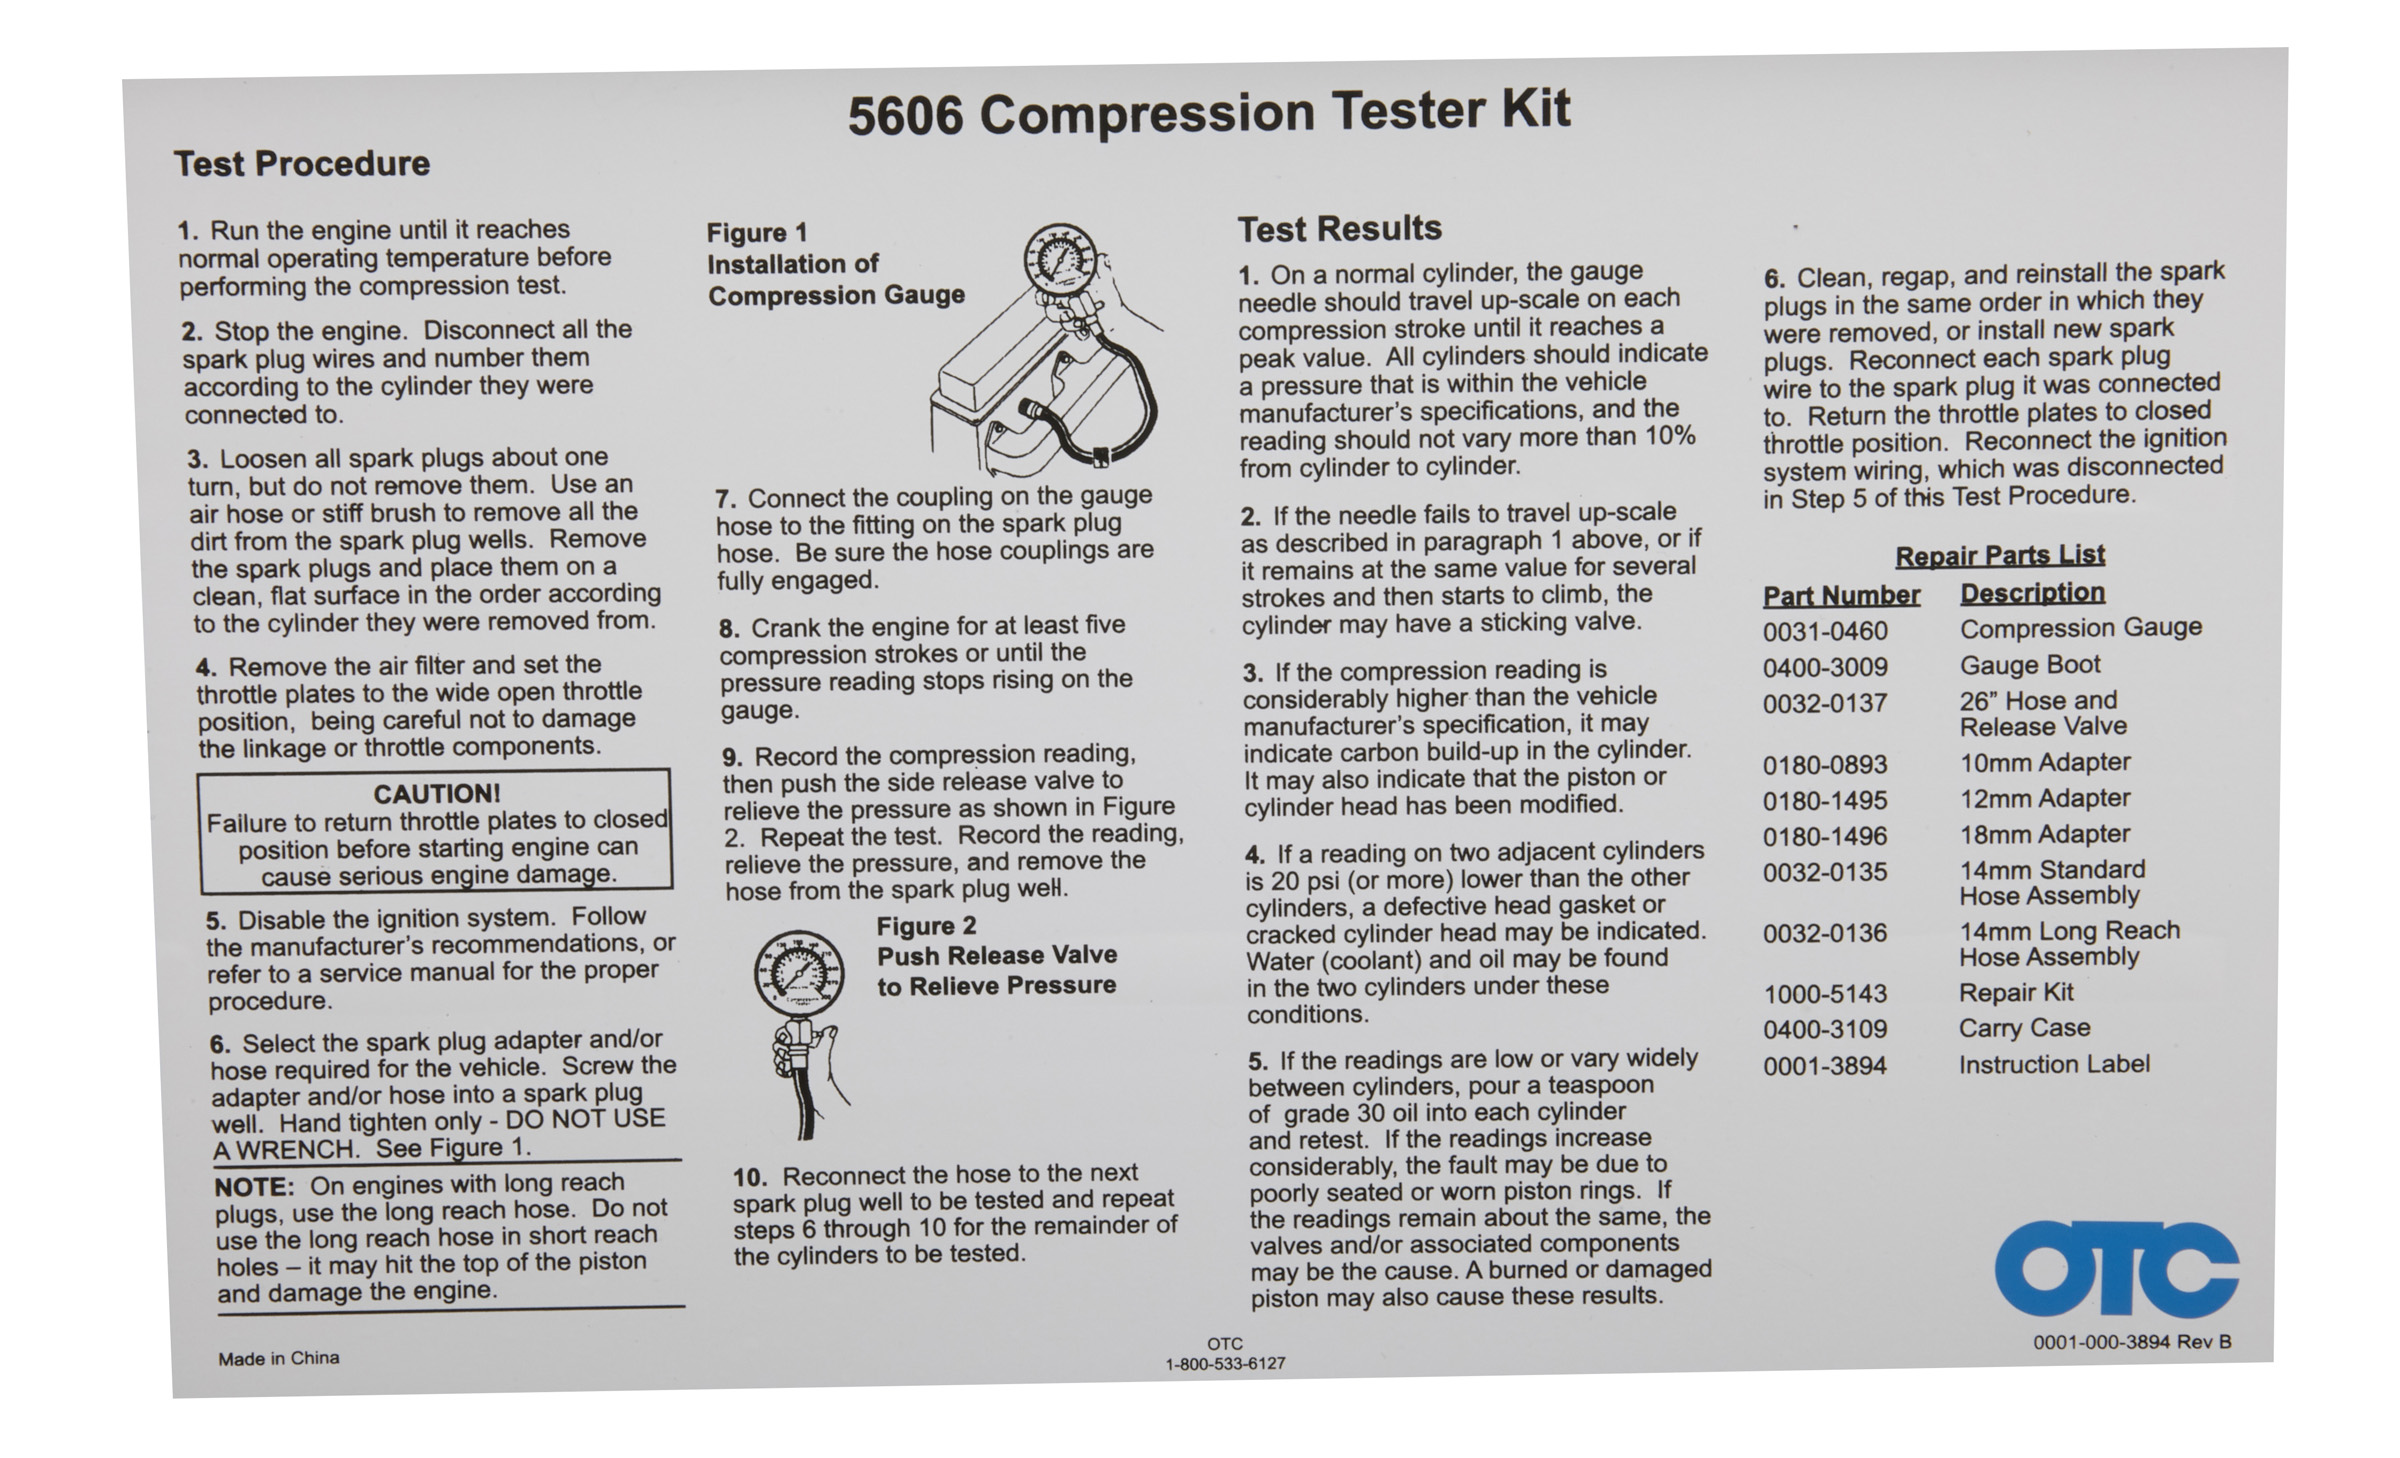 OTC COMPRESSION TESTER KIT 5606